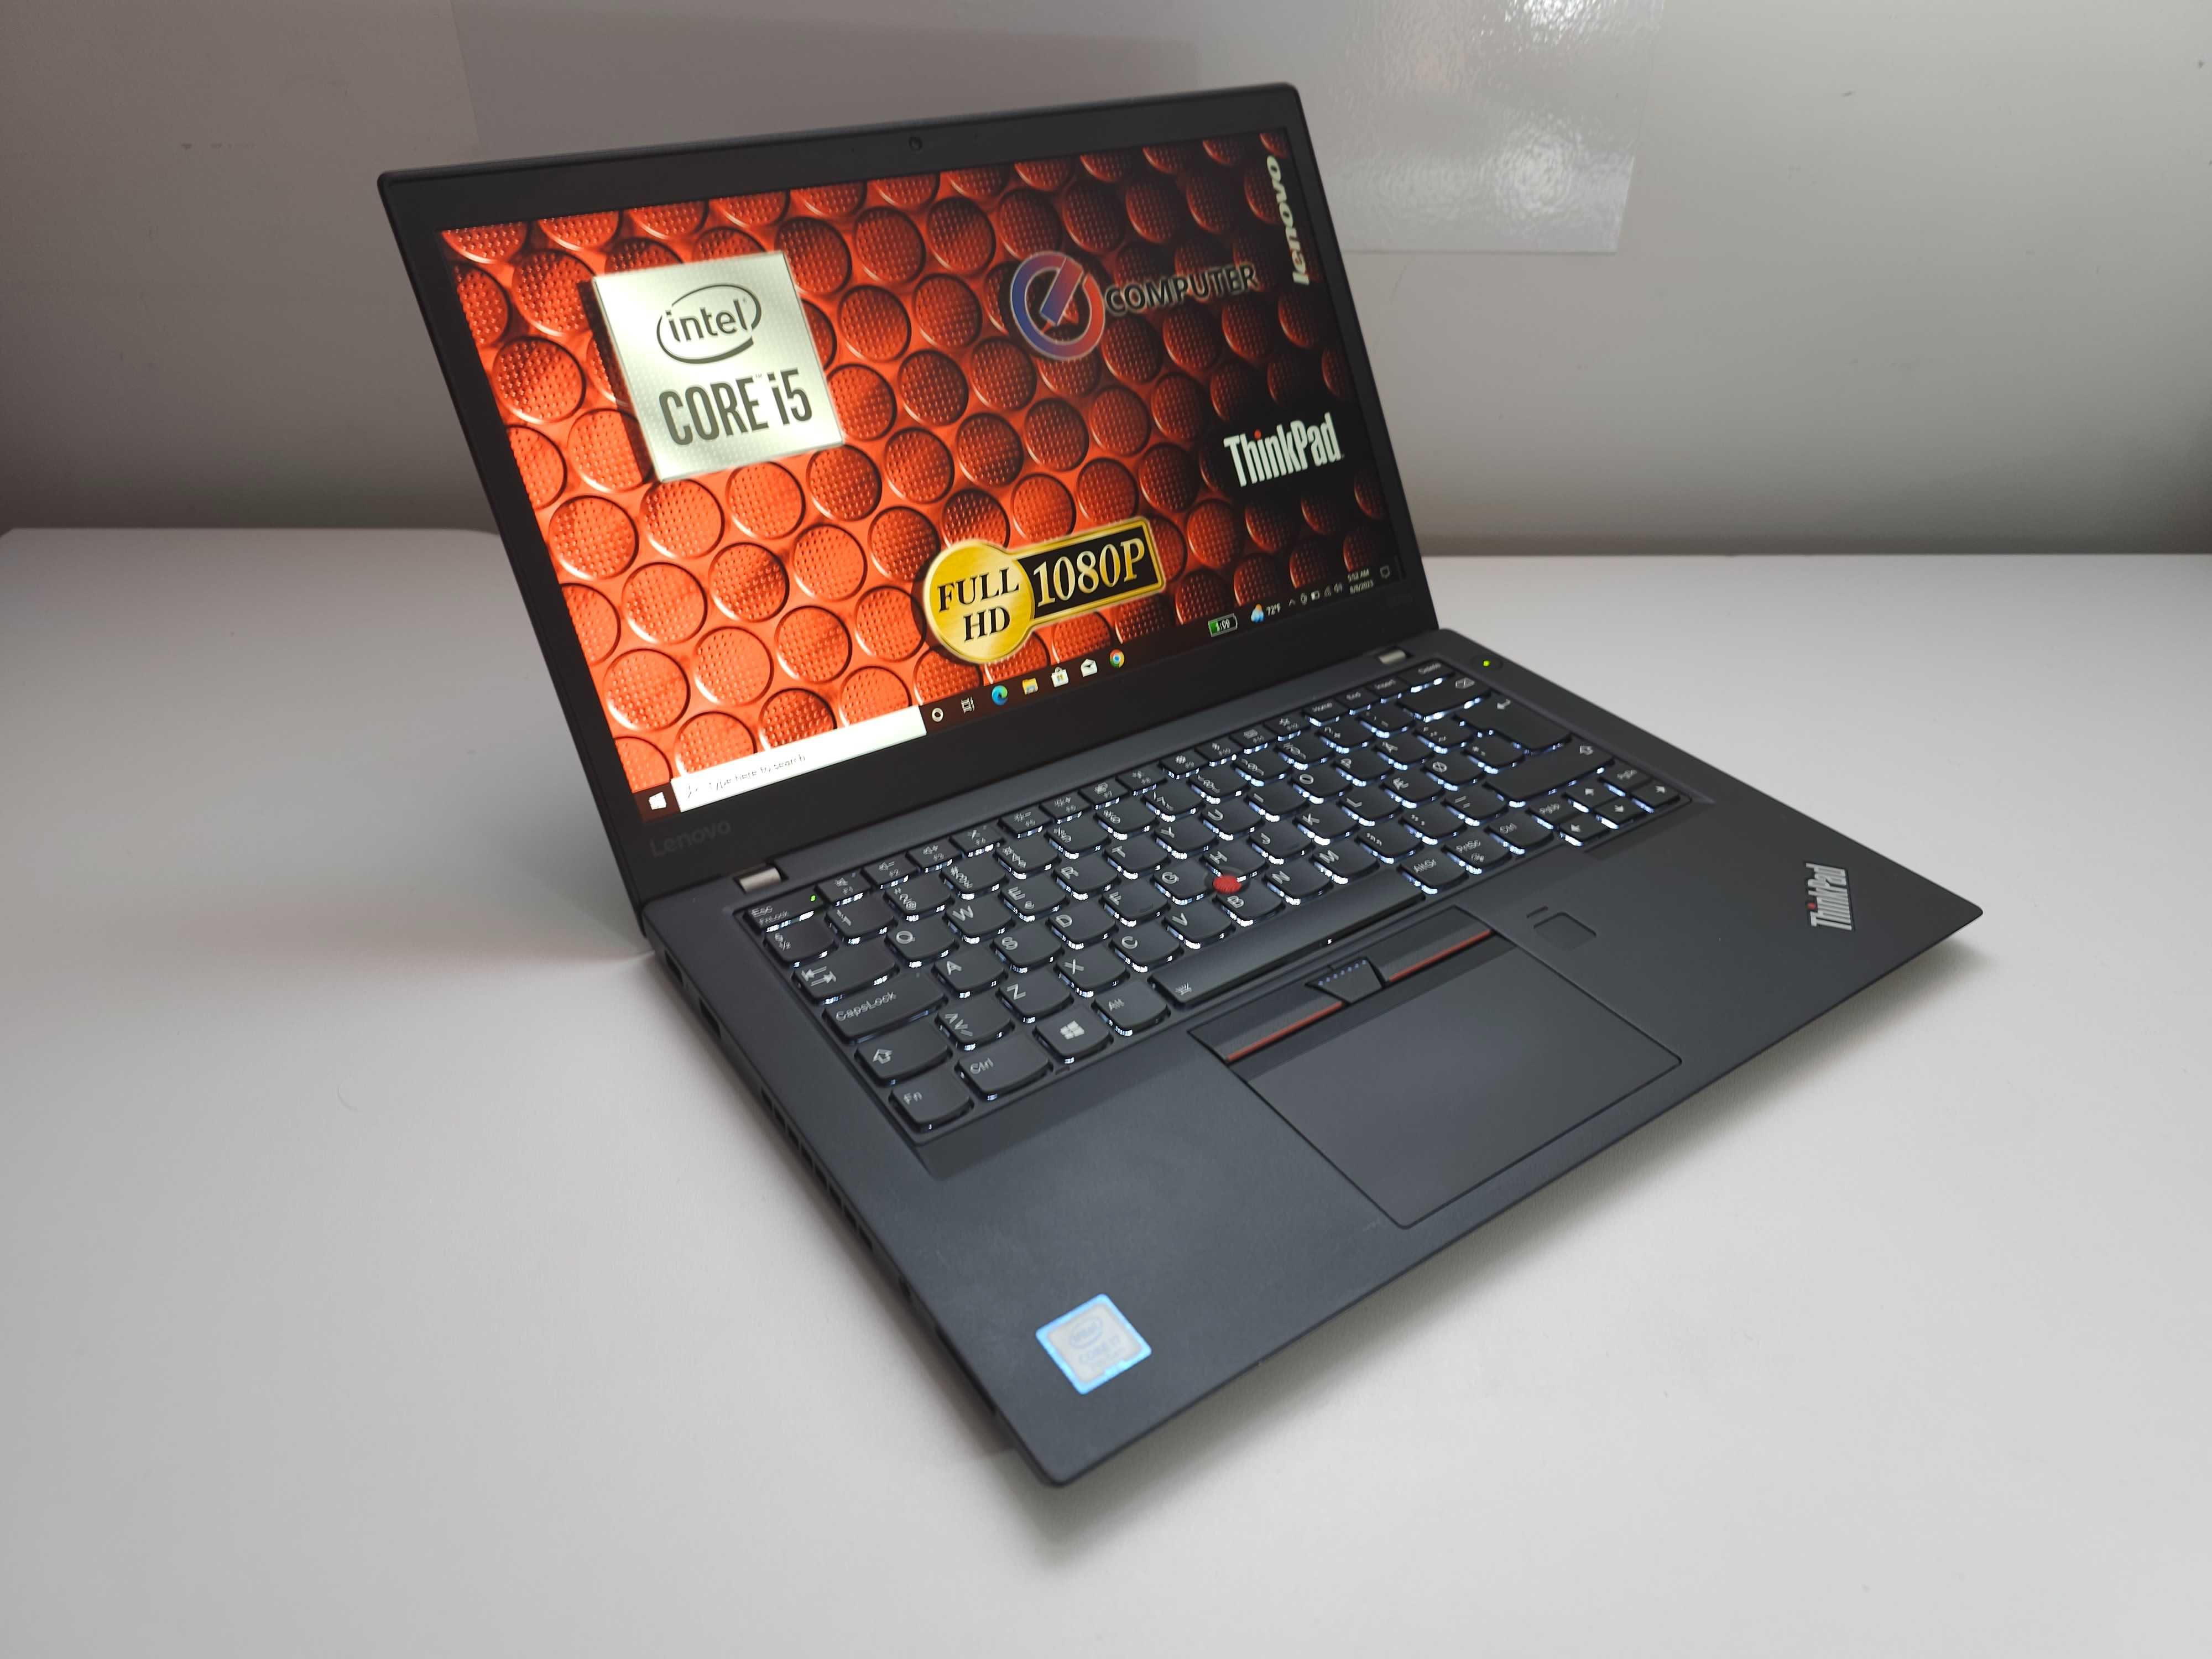 REDUCERE !Laptop Lenovo i7 20GB  SLIM FullHD iluminare . Garantie 1 an